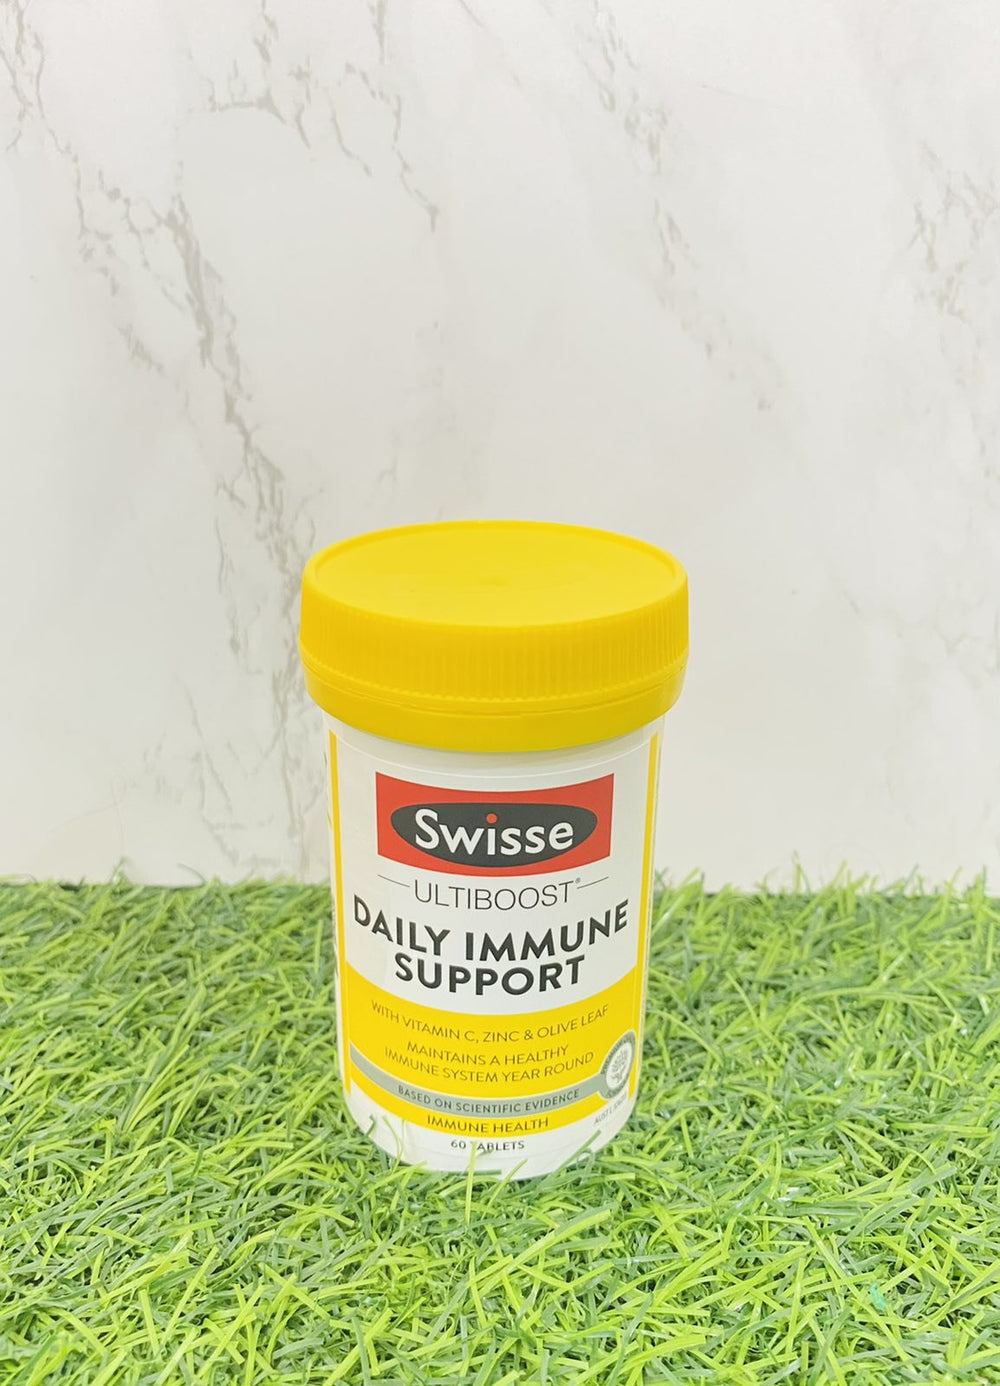 Swisse daily immune support - 60tablets - Lemonbaby